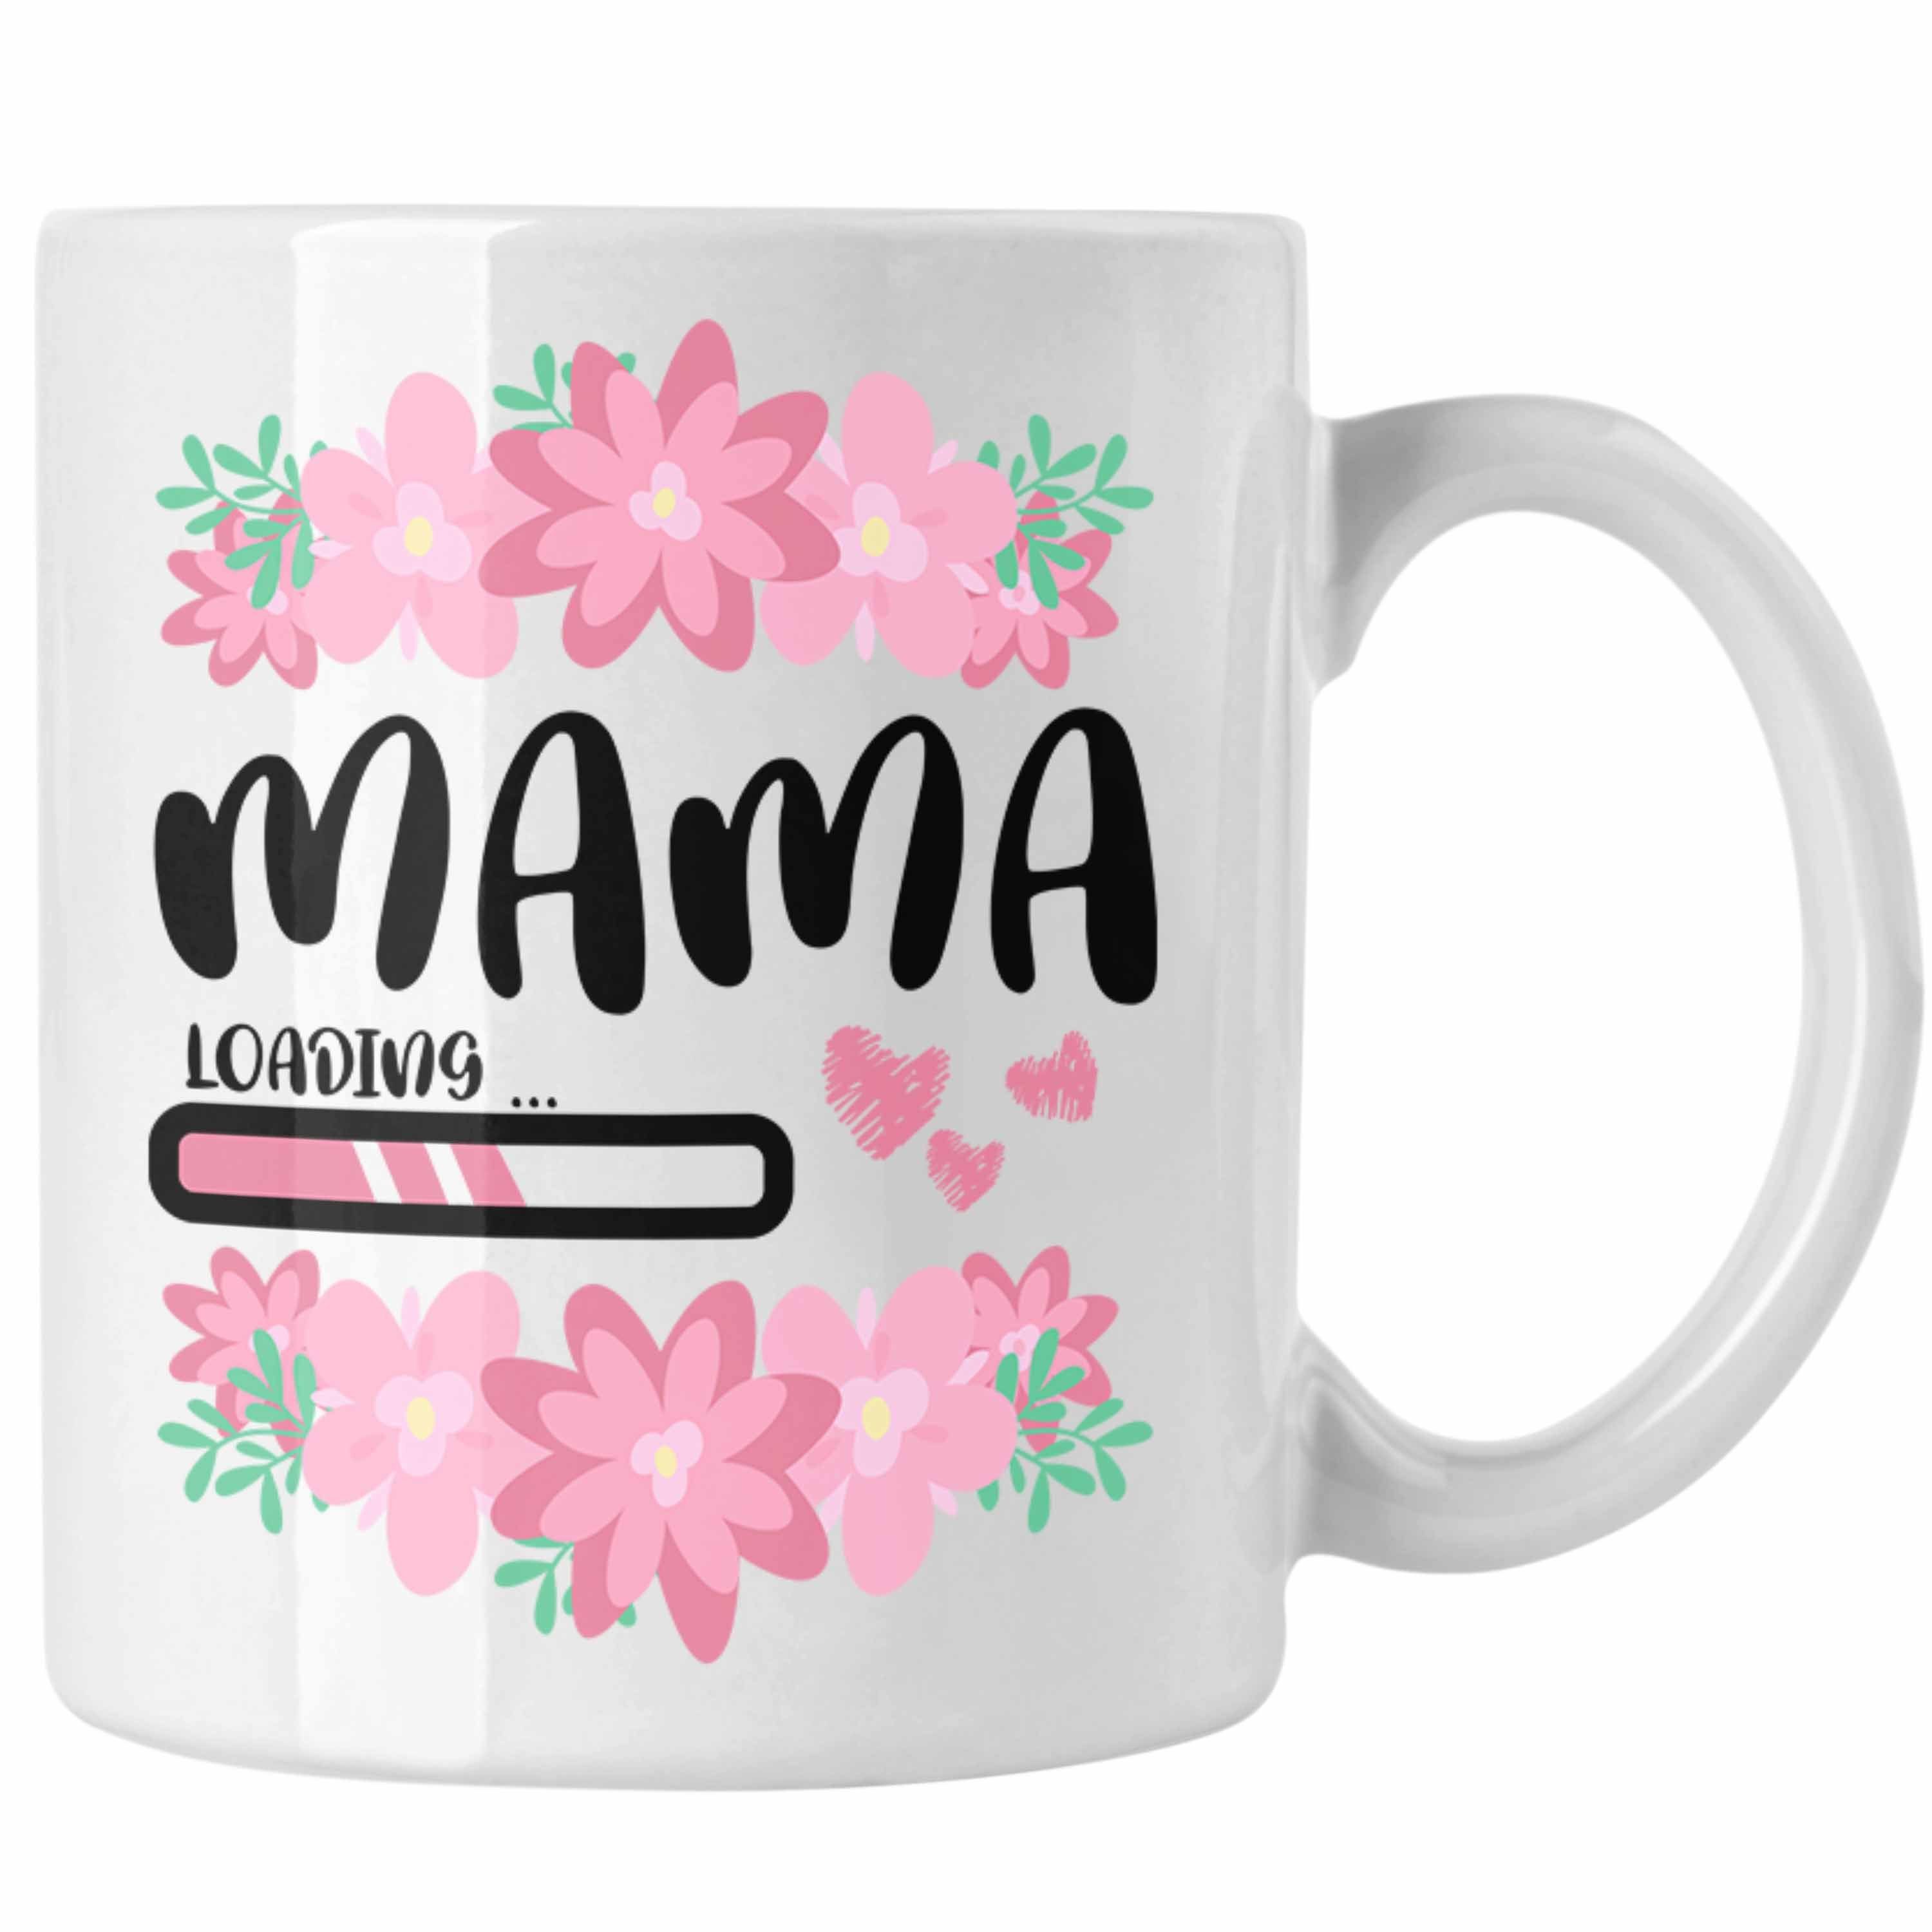 Trendation Tasse Trendation - Mama Loading Tasse Rosa Geschenk Schwangerschaft Baby Kaffeetasse Schwangerschaftsankündigung Weiss